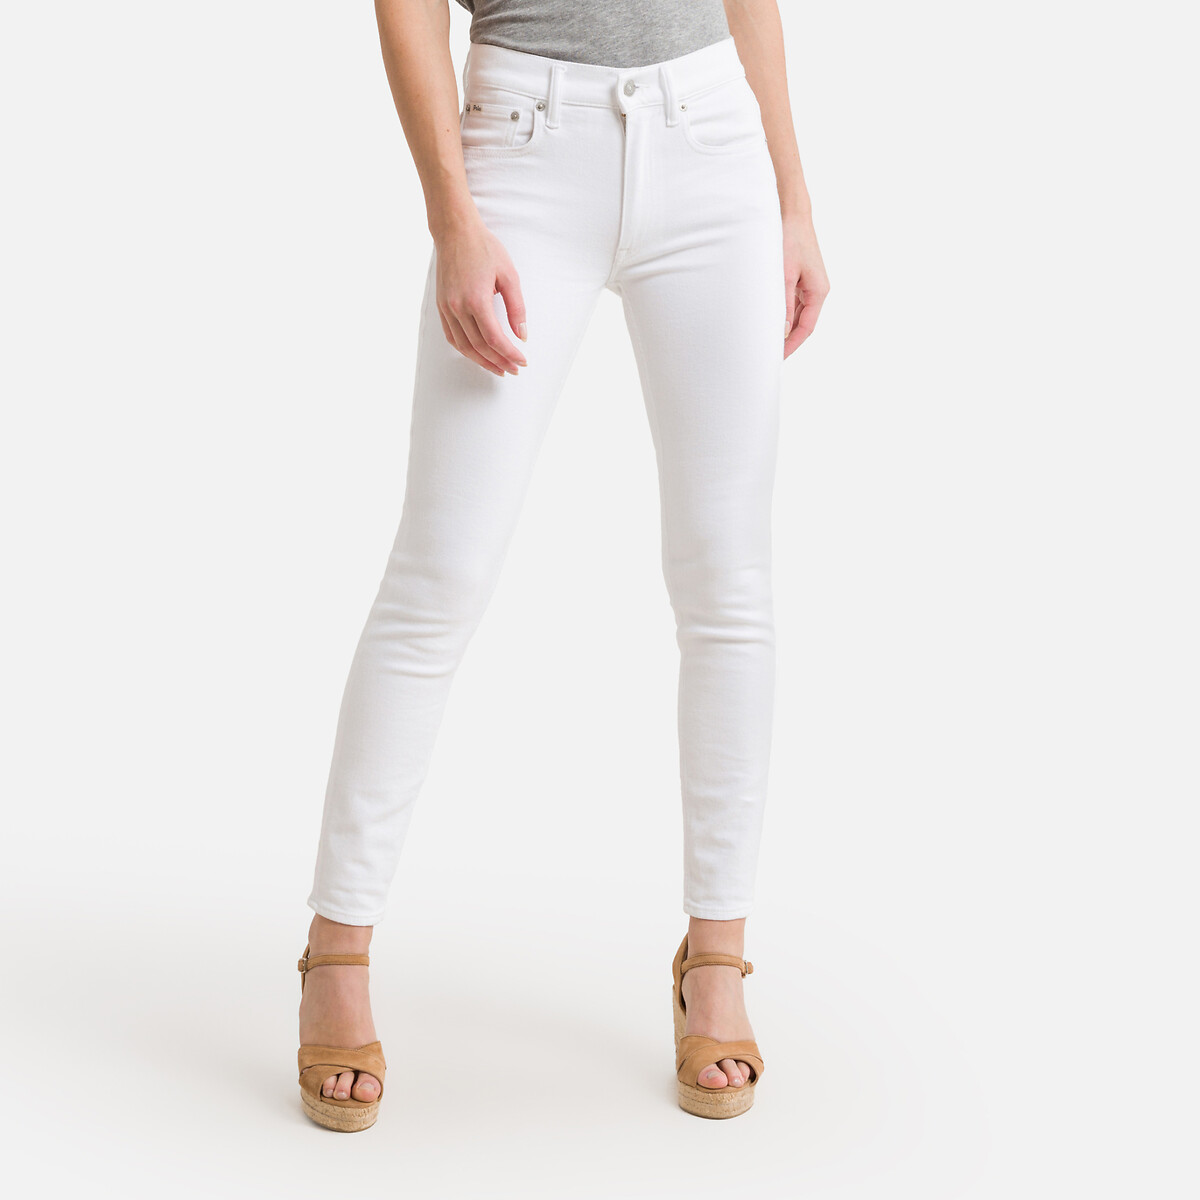 Джинсы скинни 30 (US) - 46 (RUS) белый джинсы скинни incity прилегающие завышенная посадка размер 30w 32l серый